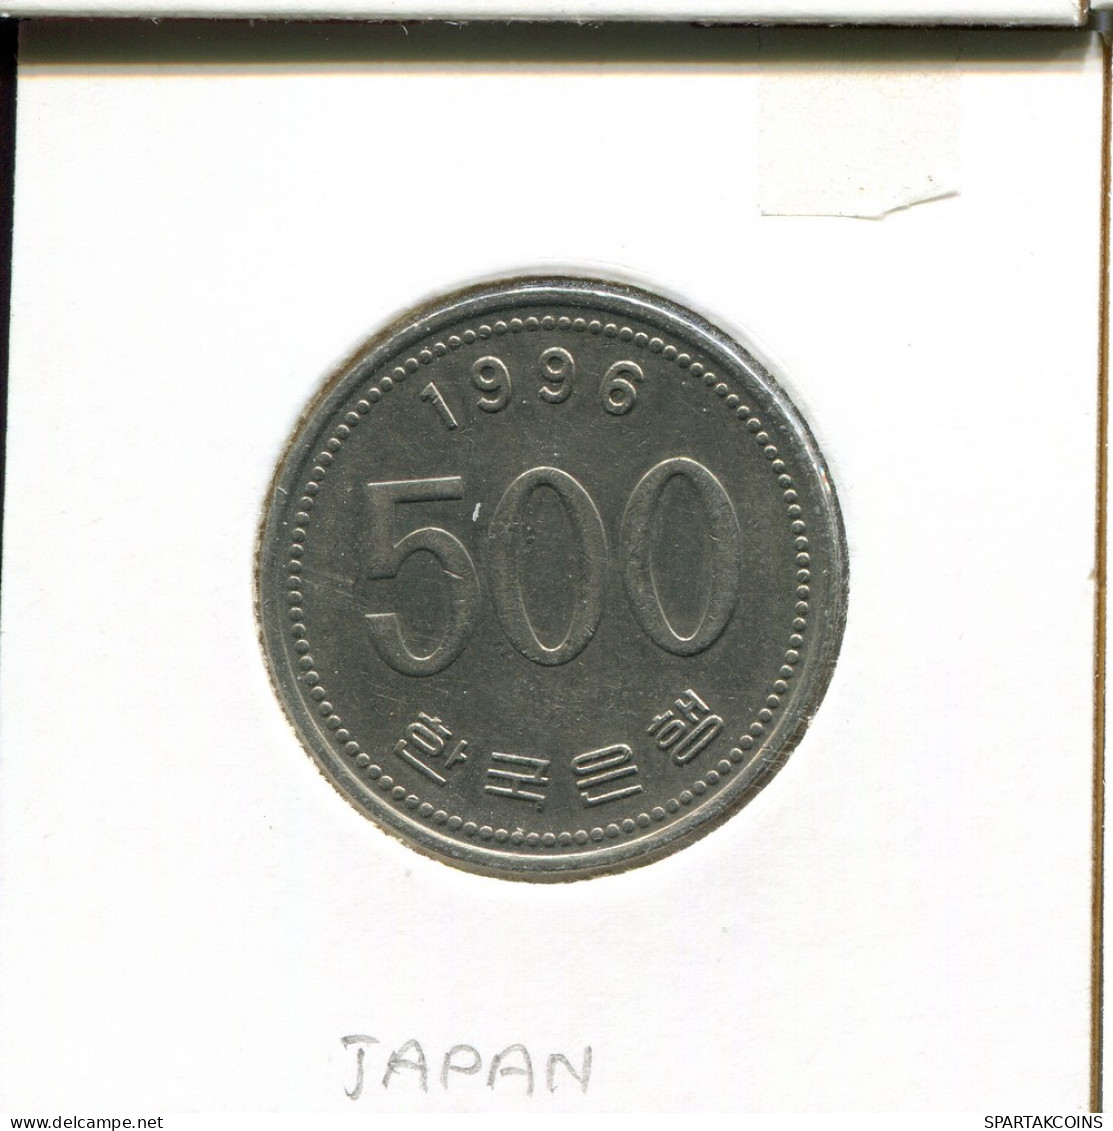 500 WON 1996 DKOREA SOUTH KOREA Münze #AS057.D - Korea (Zuid)